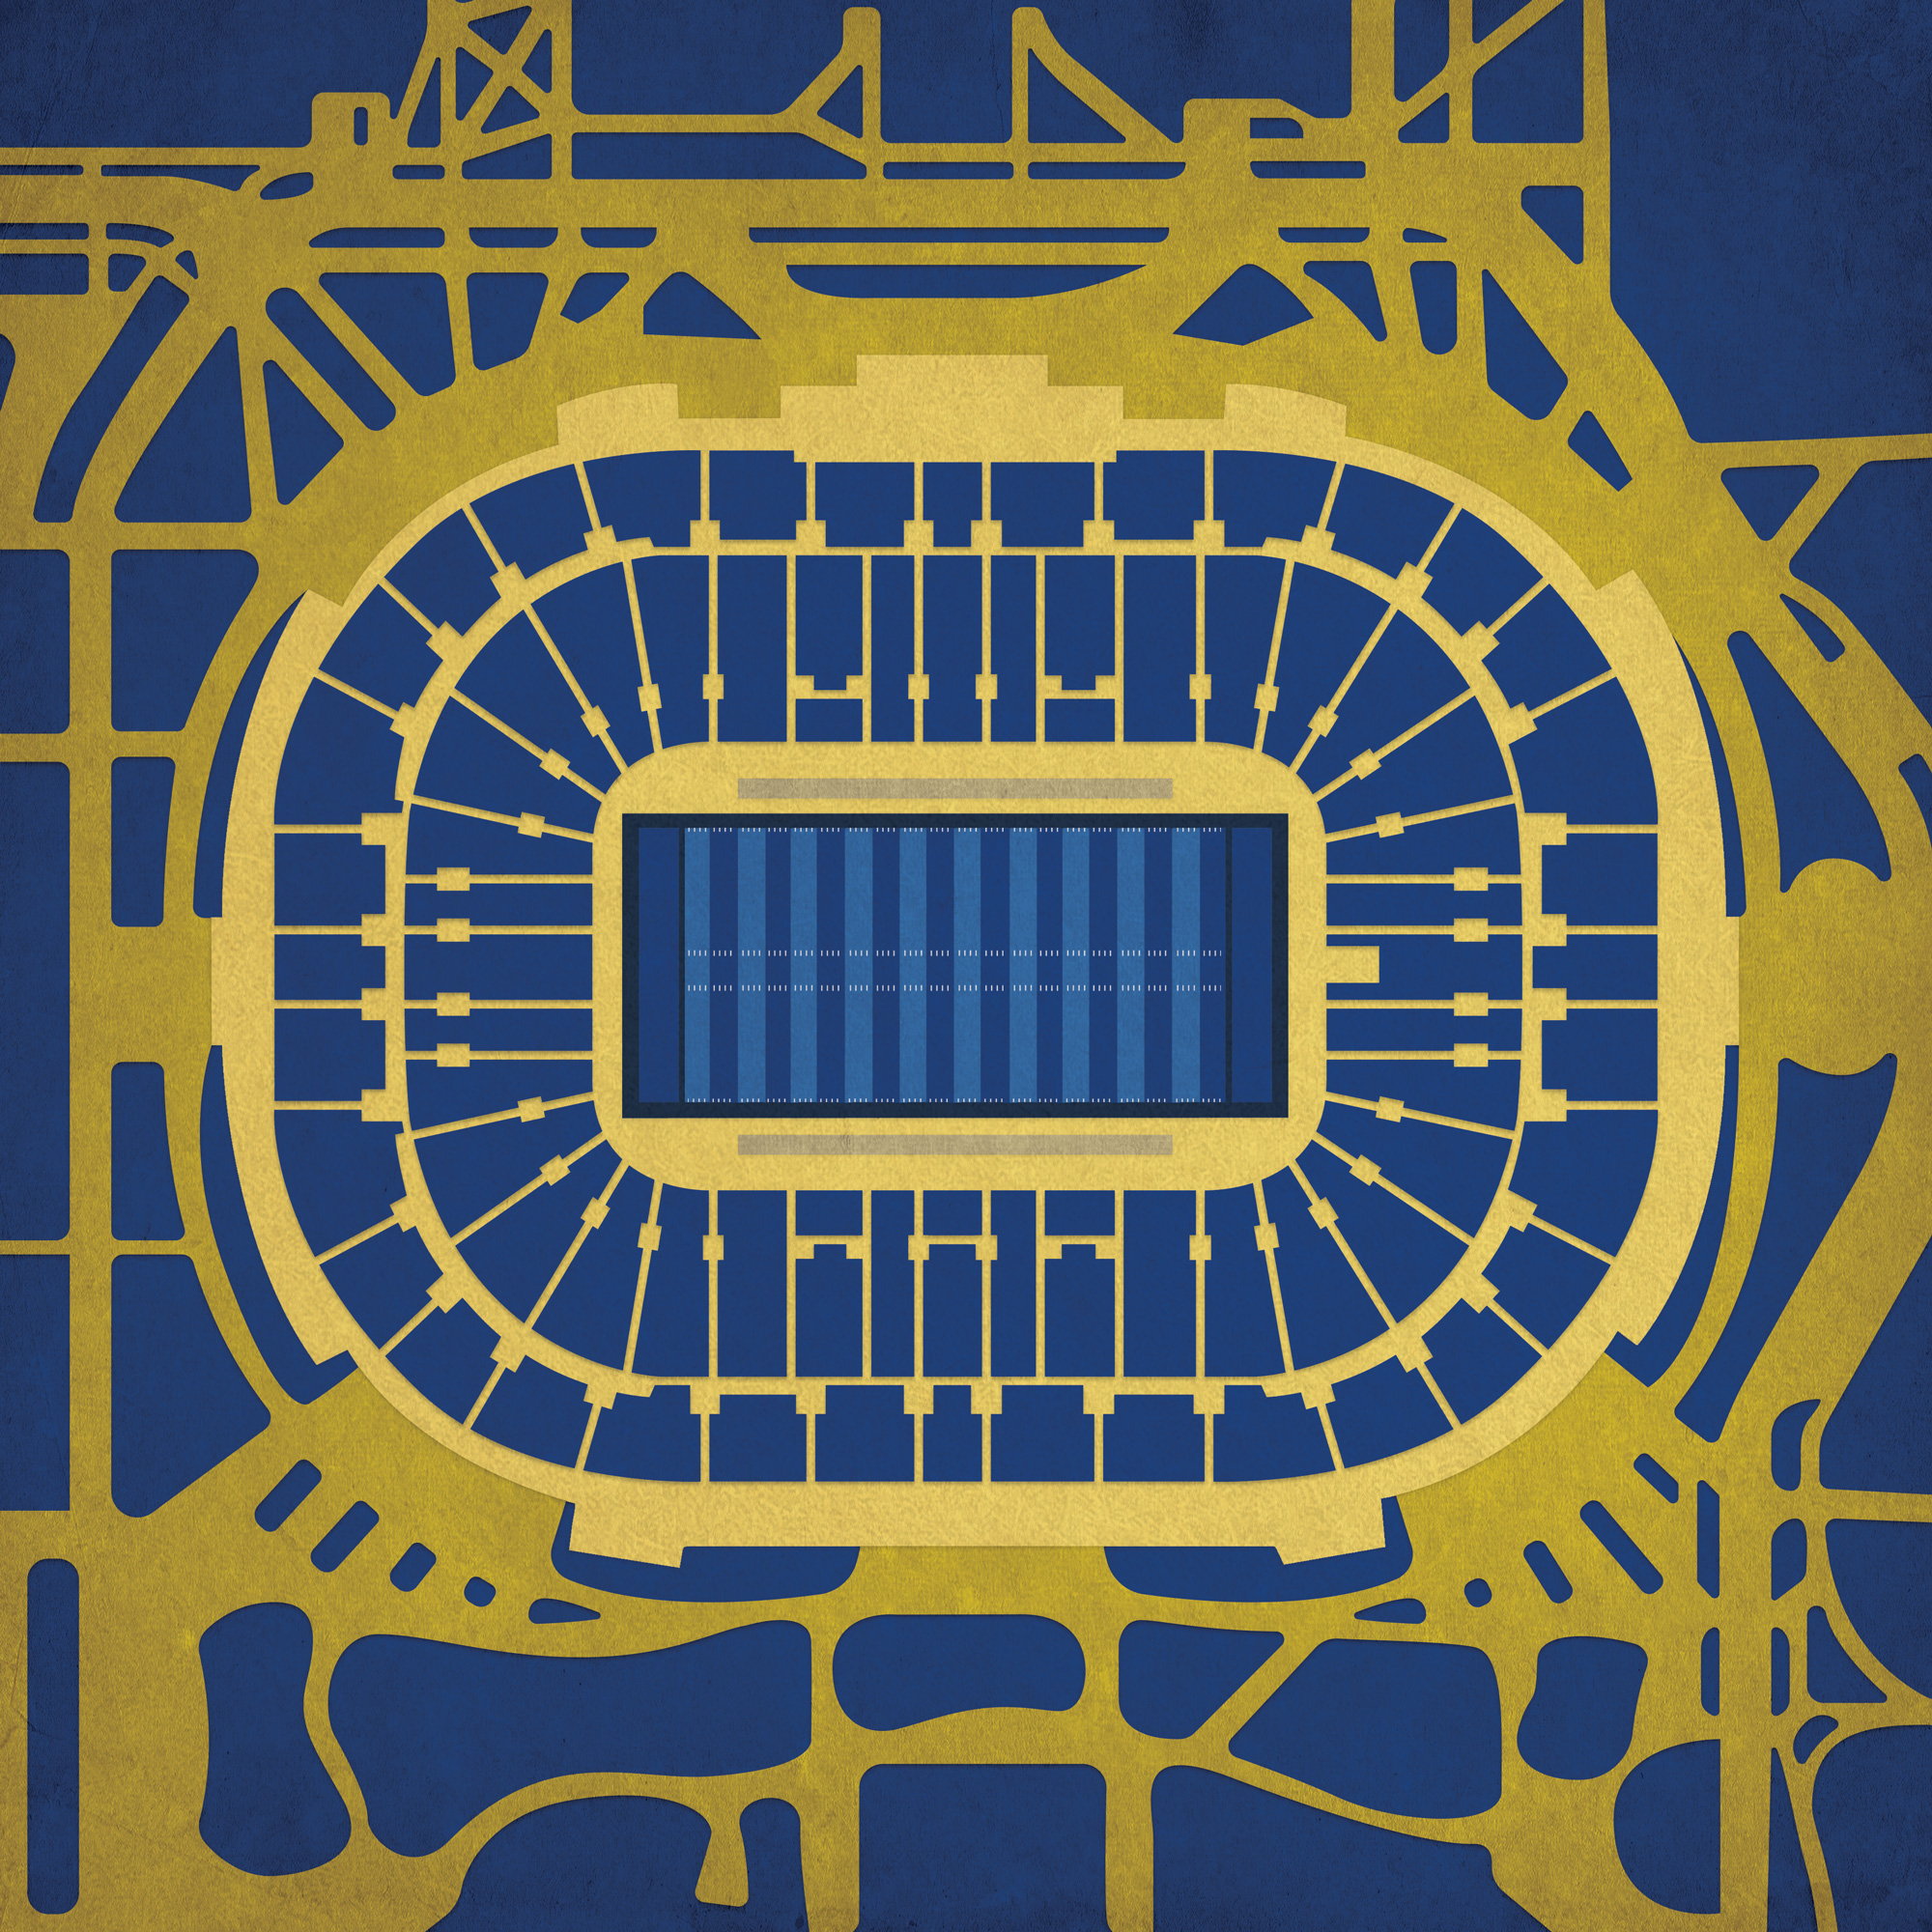 Notre Dame Stadium Map Art The